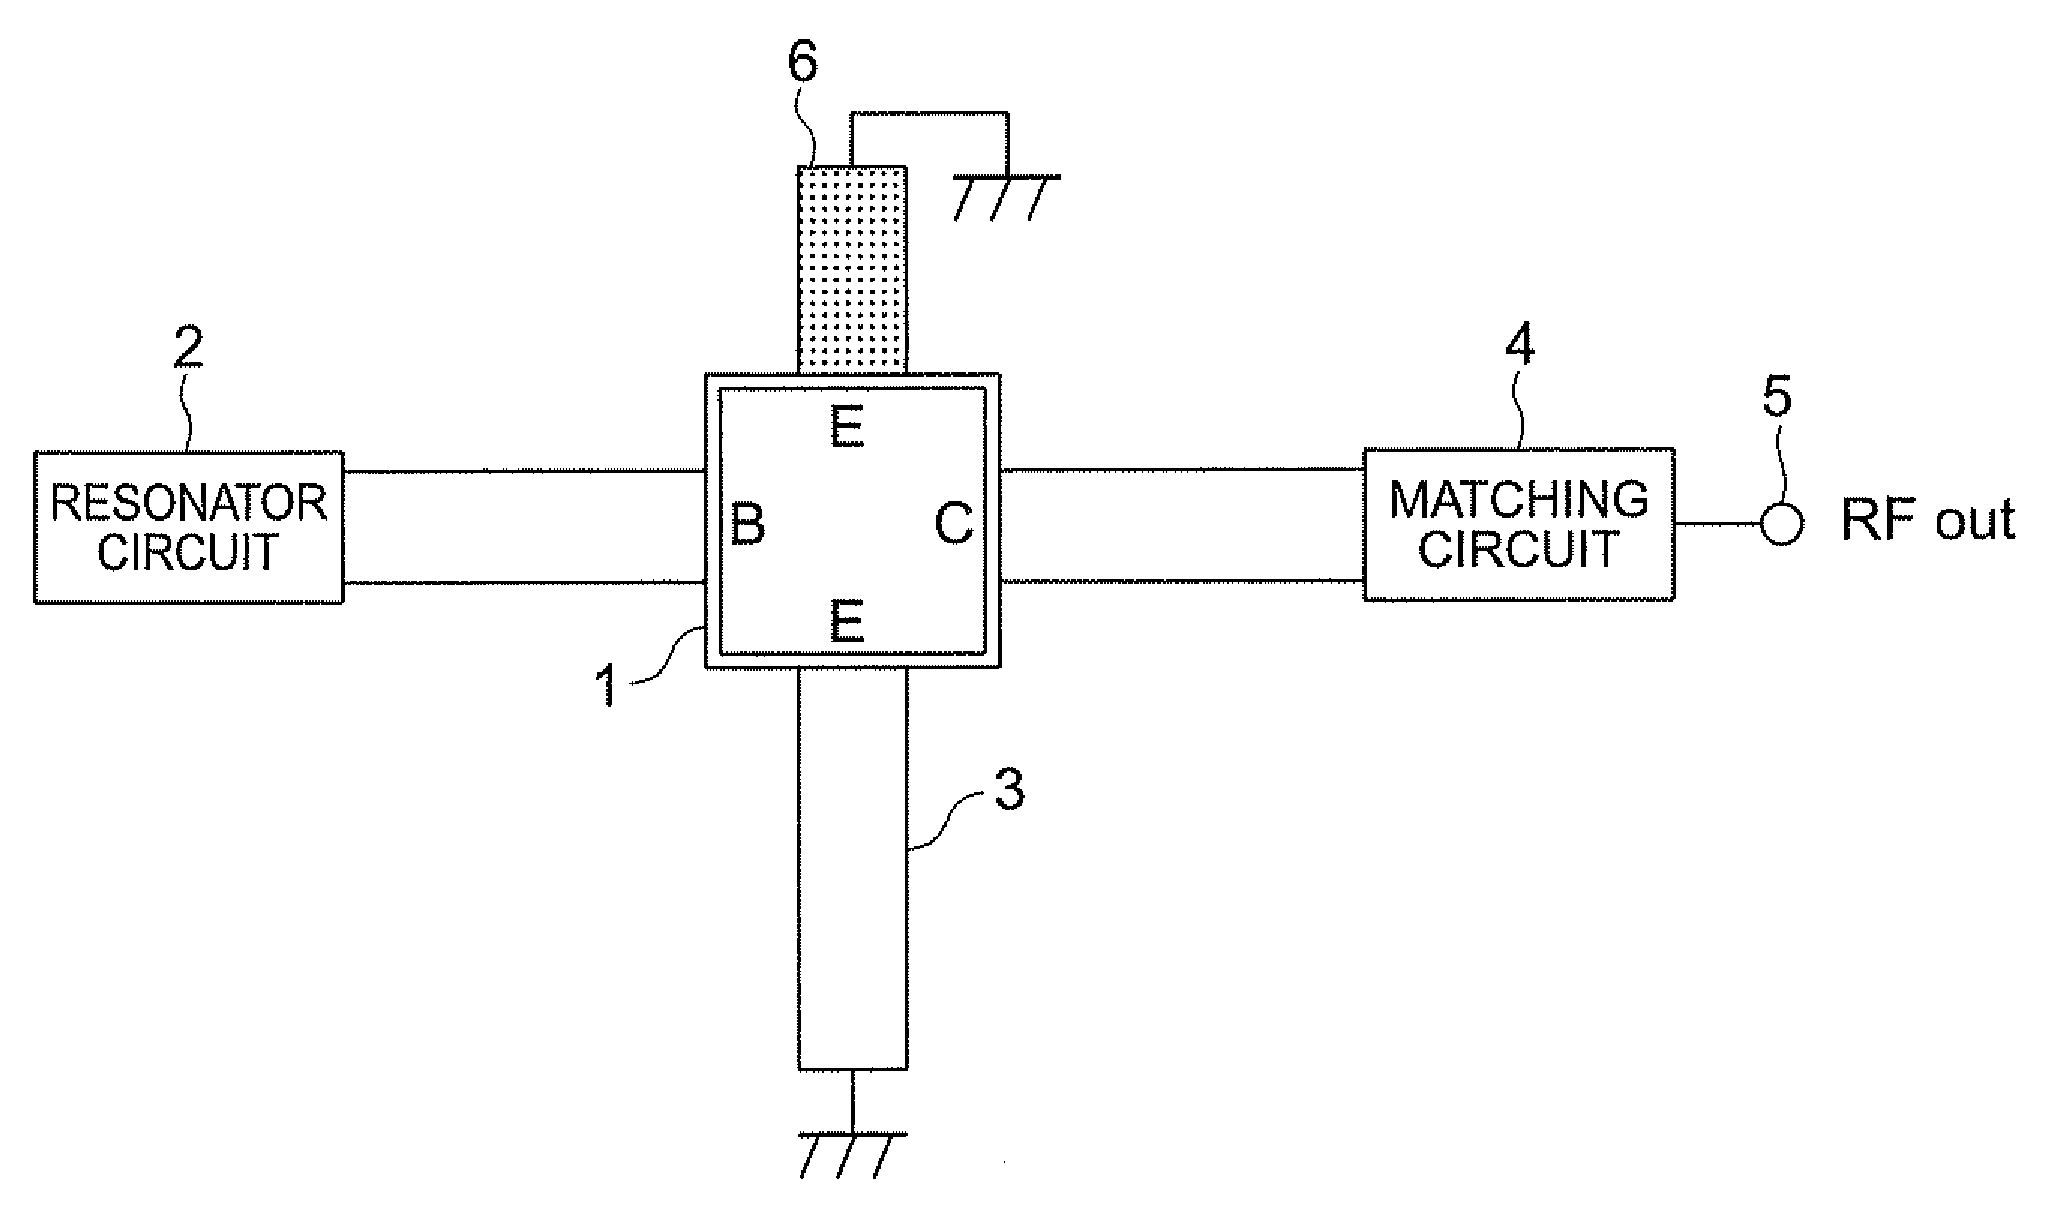 Second harmonic oscillator